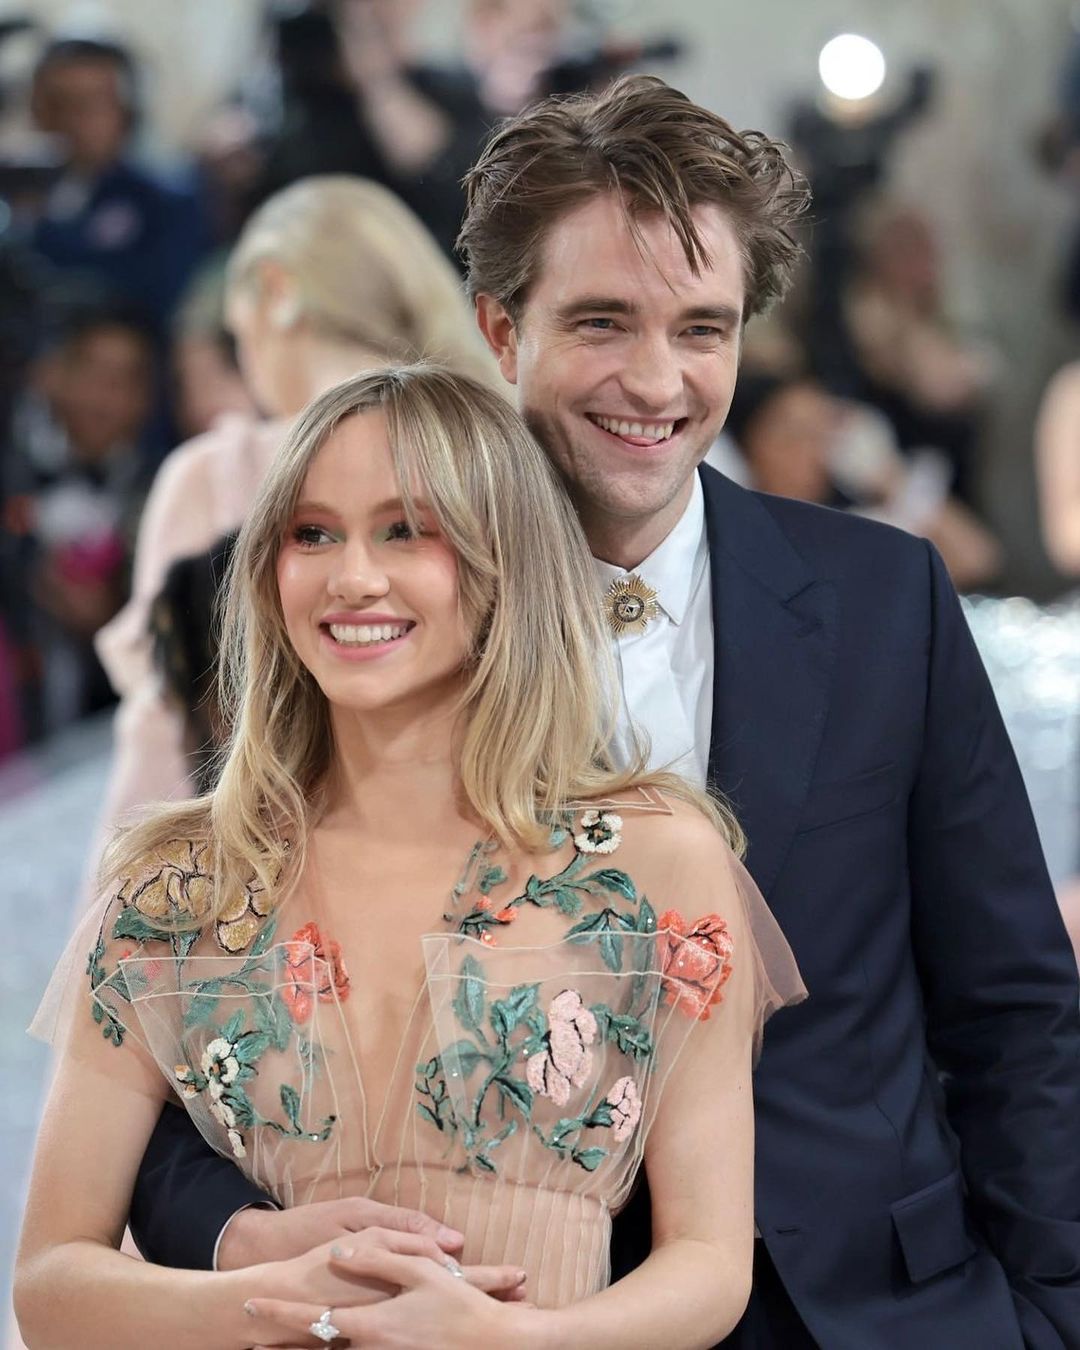 Actor Robert Pattinson attended the 2023 Met Gala with his girlfriend, model Suki Waterhouse.